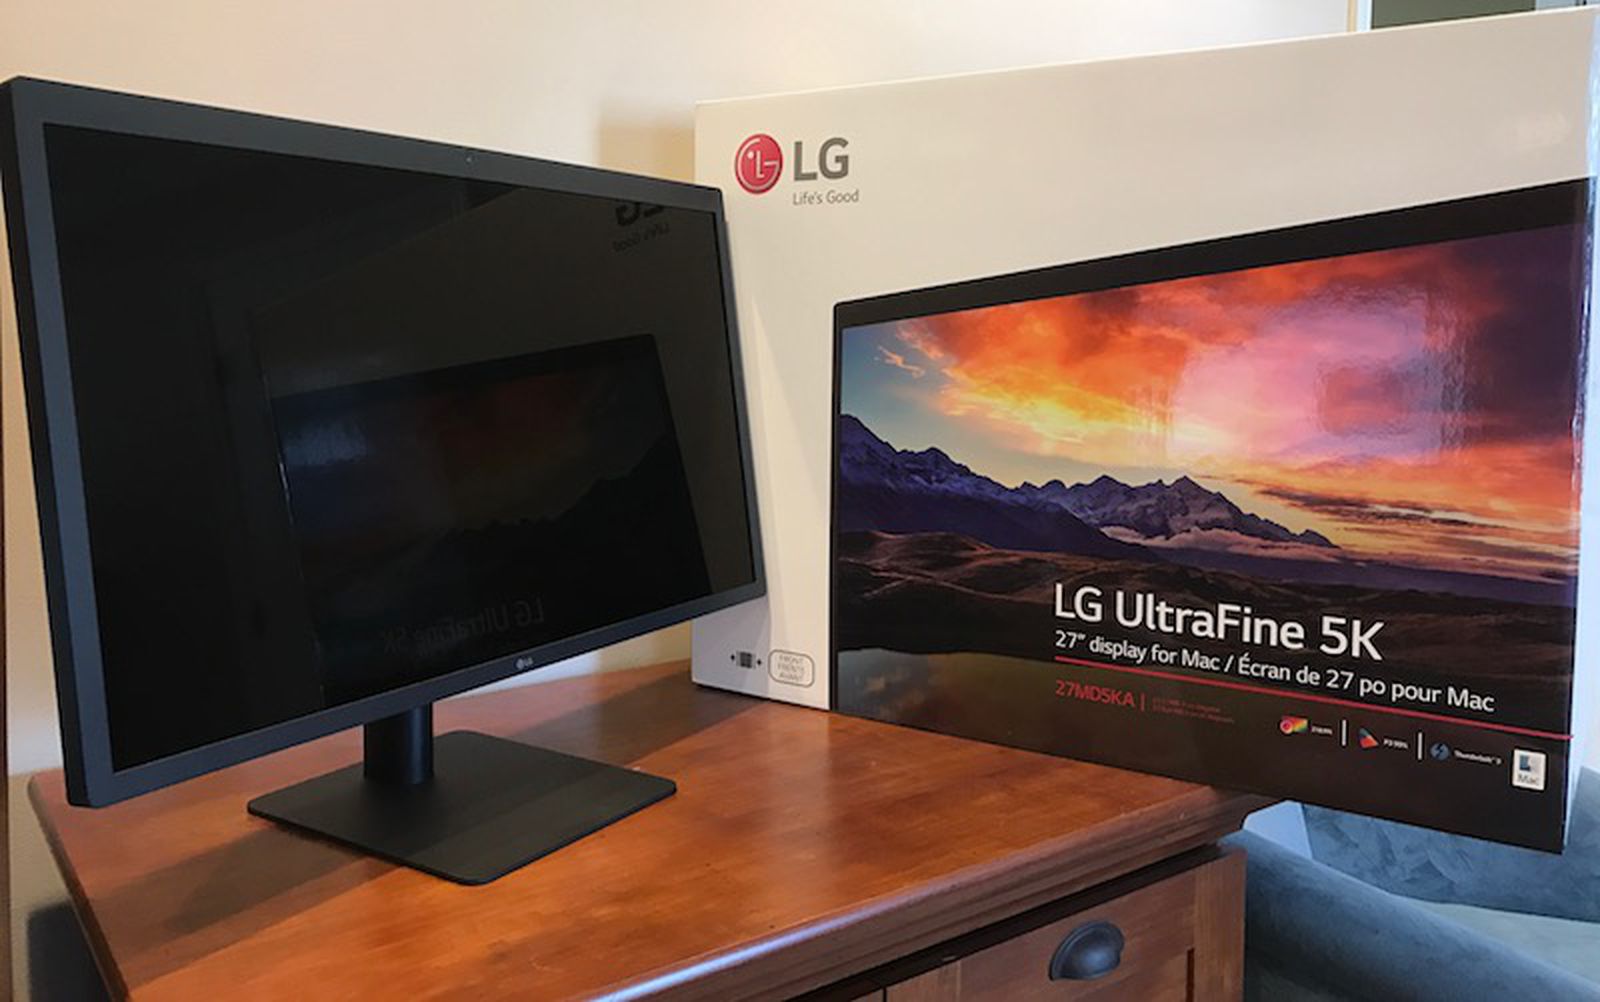 LG Ultrafine 5K 27 Display for Mac